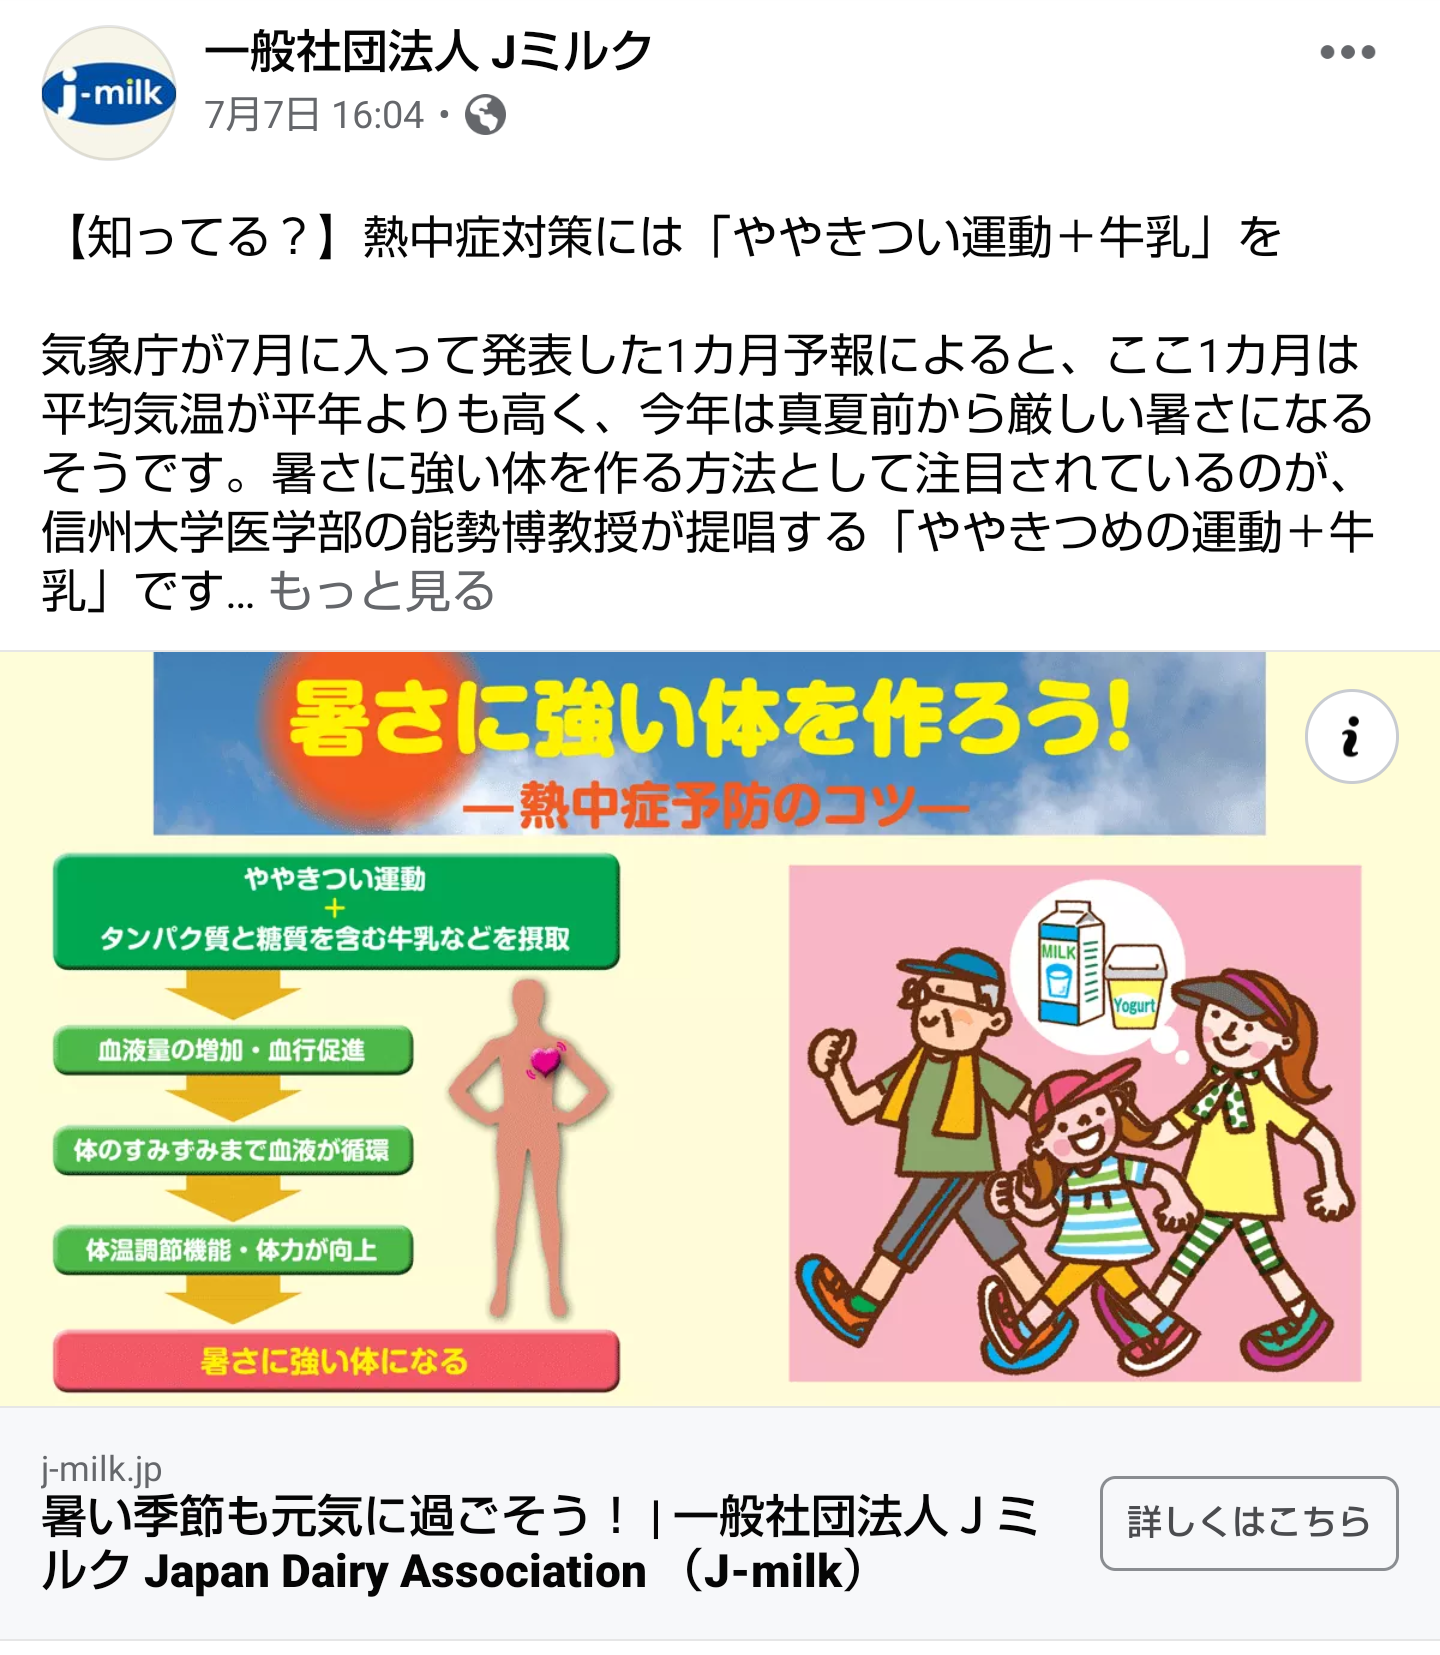 https://www.j-milk.jp/knowledge/healthcare/9fgd1p000002ebro.html